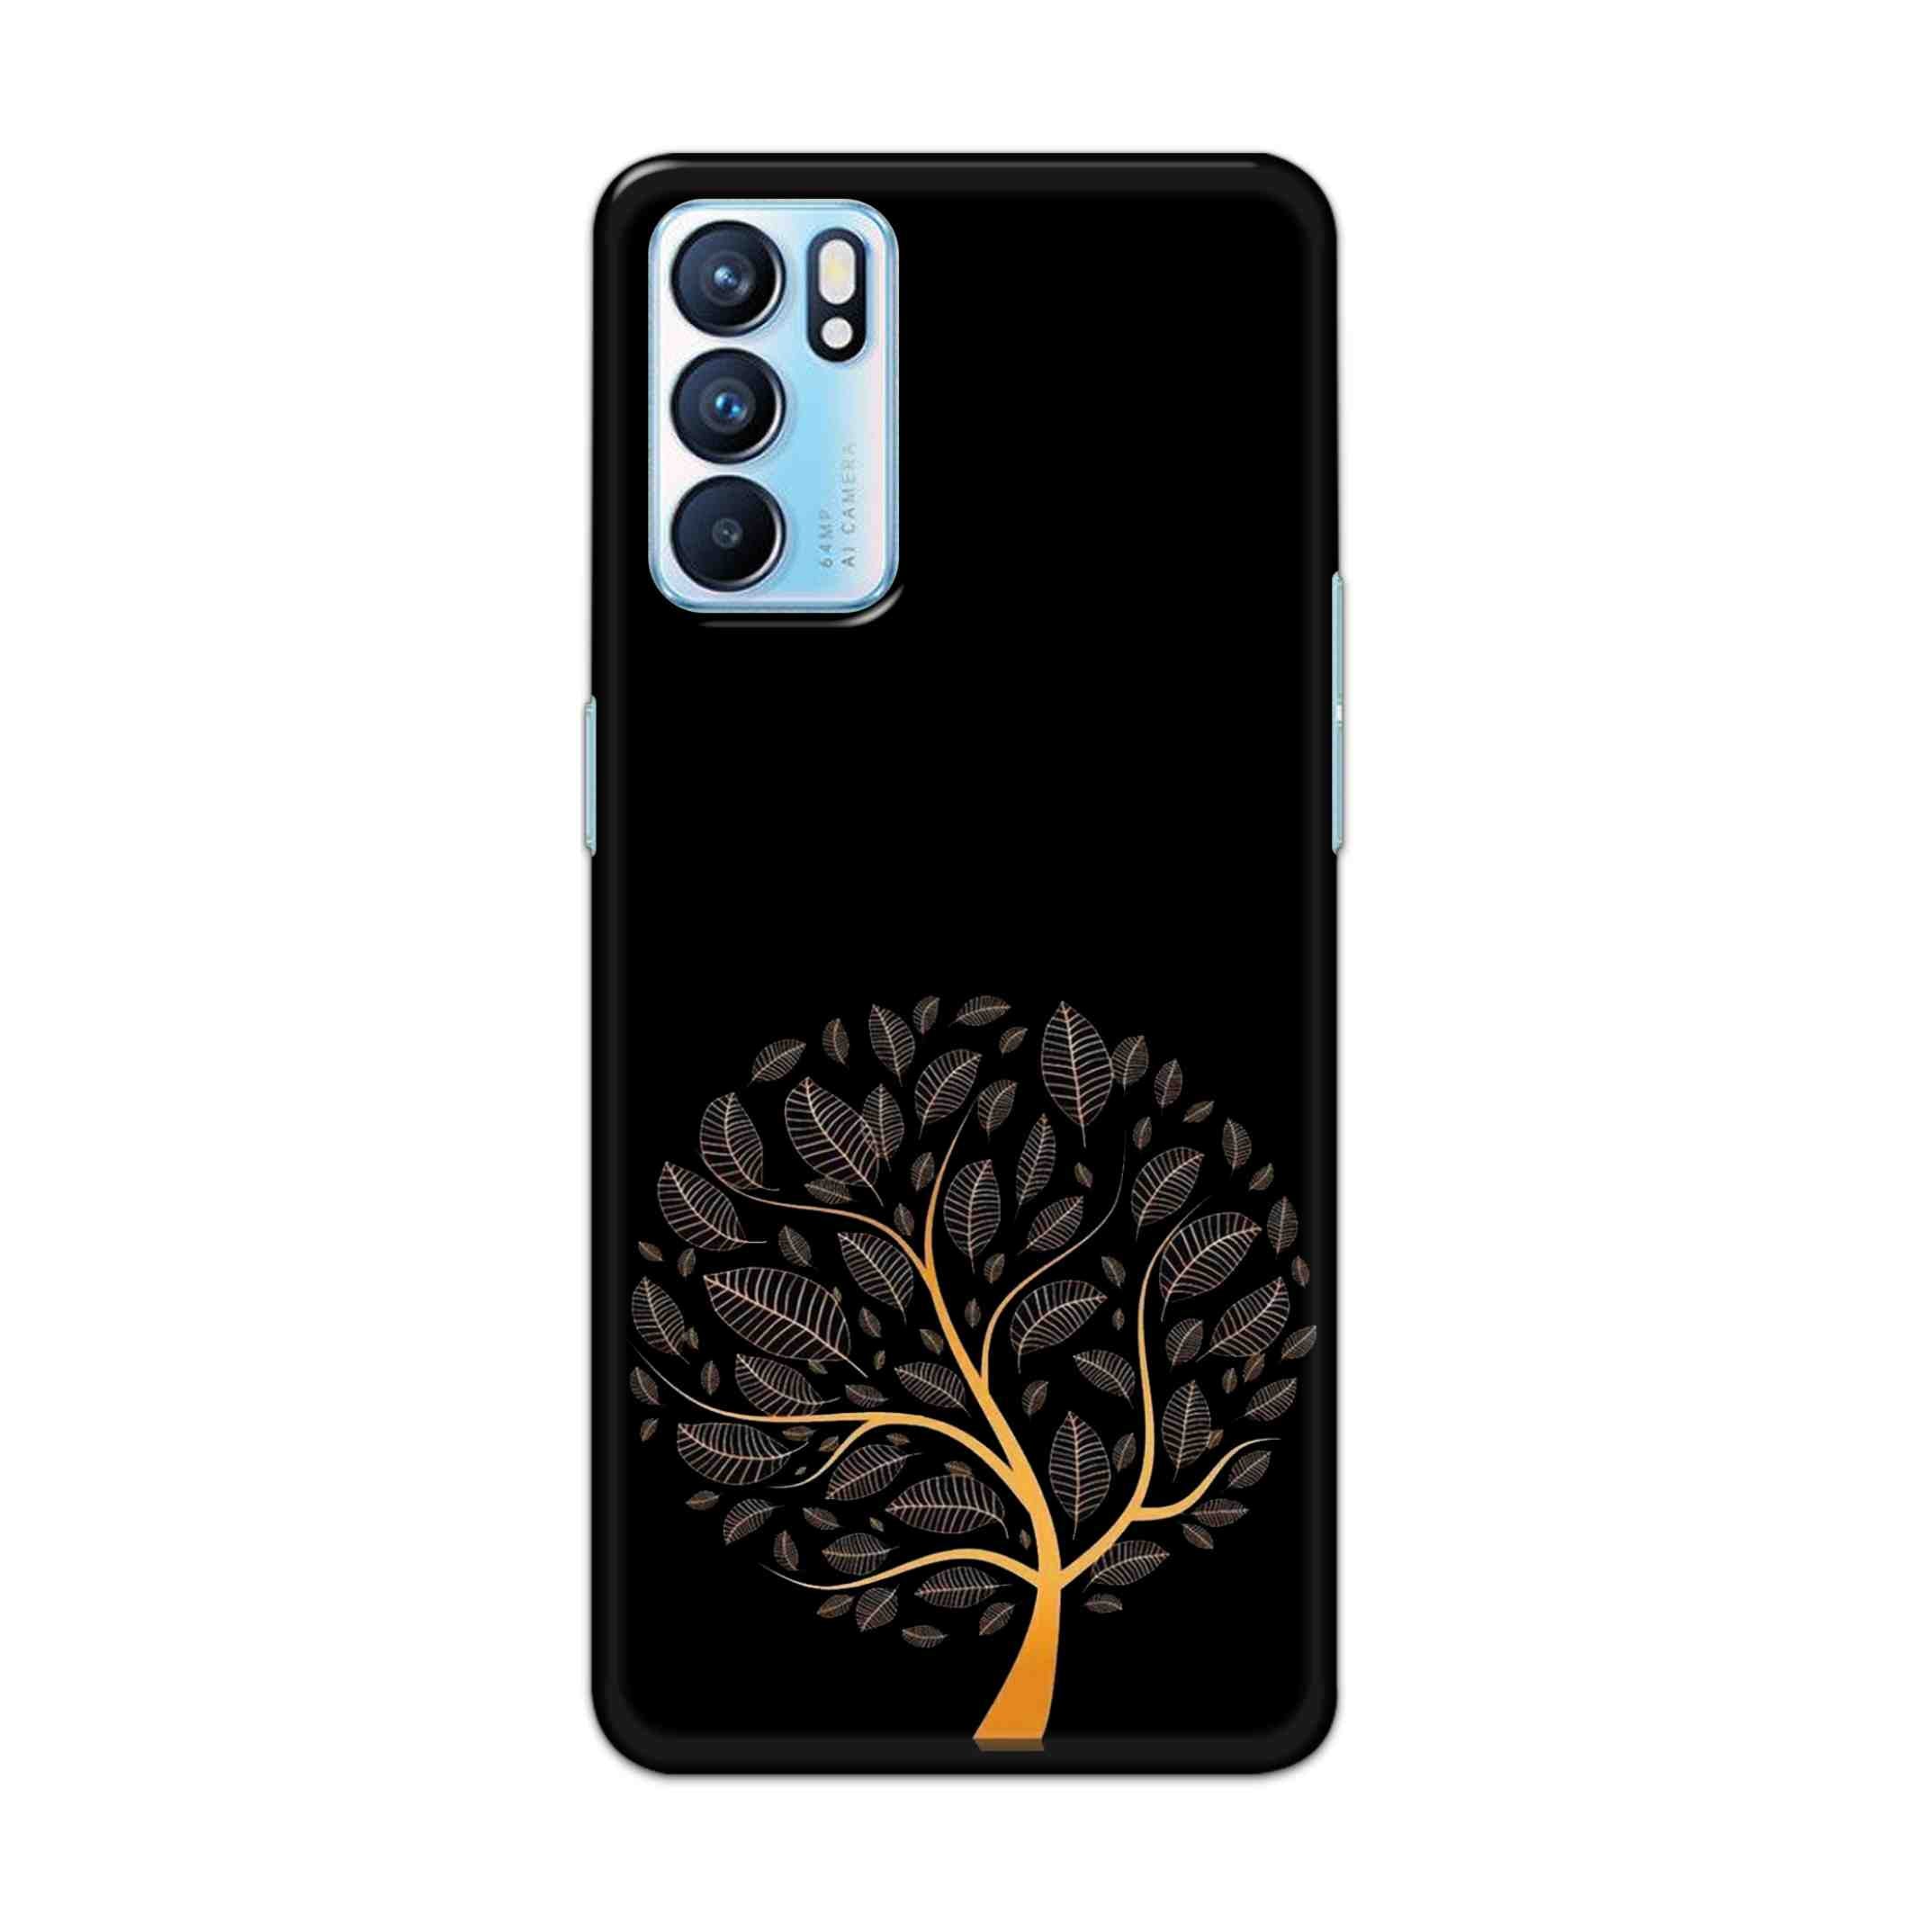 Buy Golden Tree Hard Back Mobile Phone Case Cover For OPPO RENO 6 Online